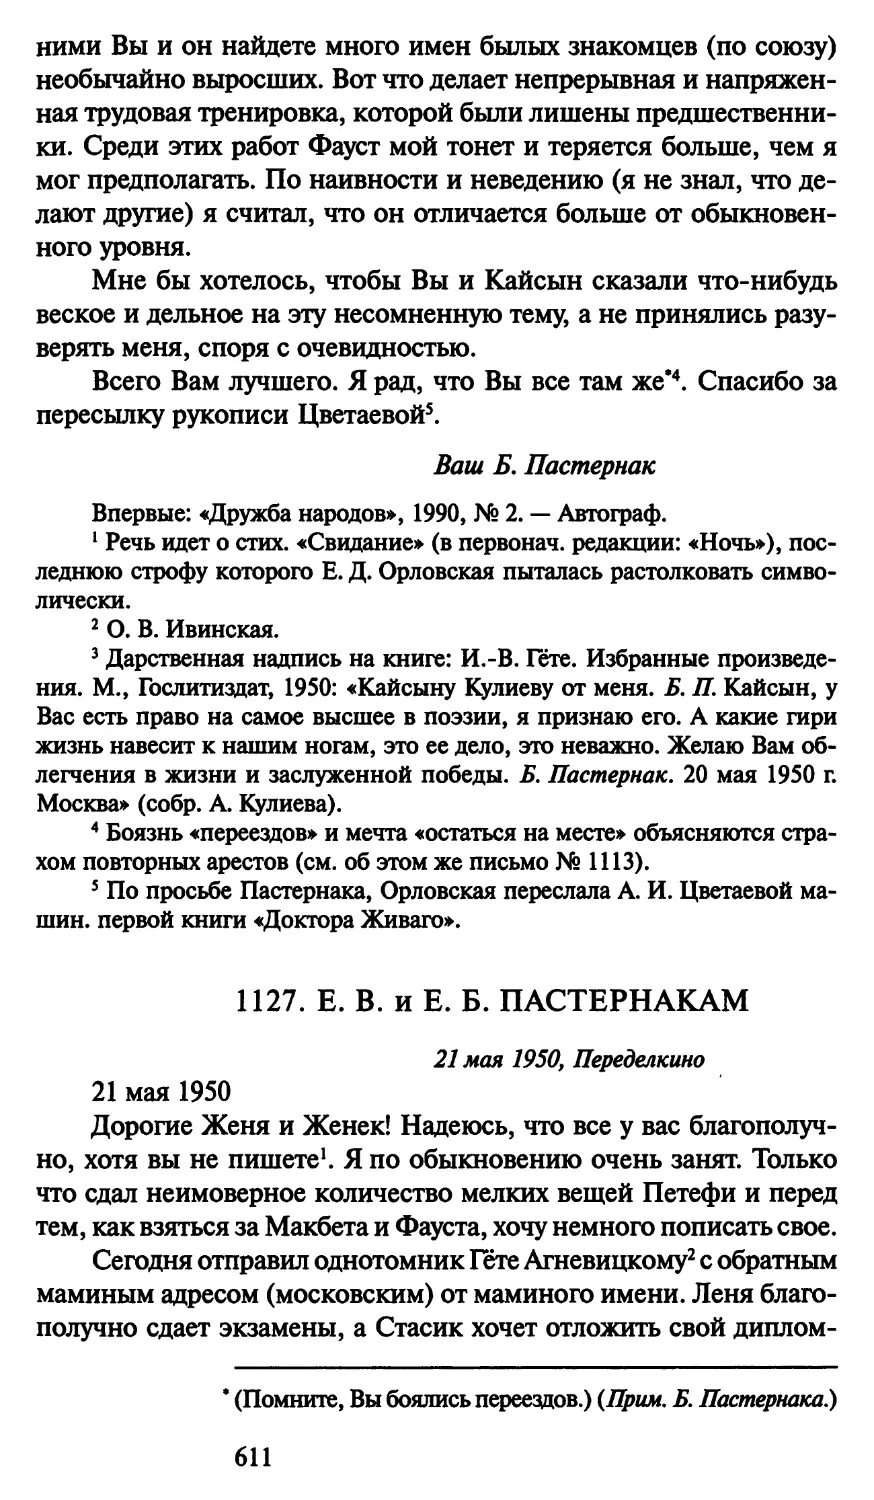 1127. Е. В. и Е. Б. Пастернакам 21 мая 1950